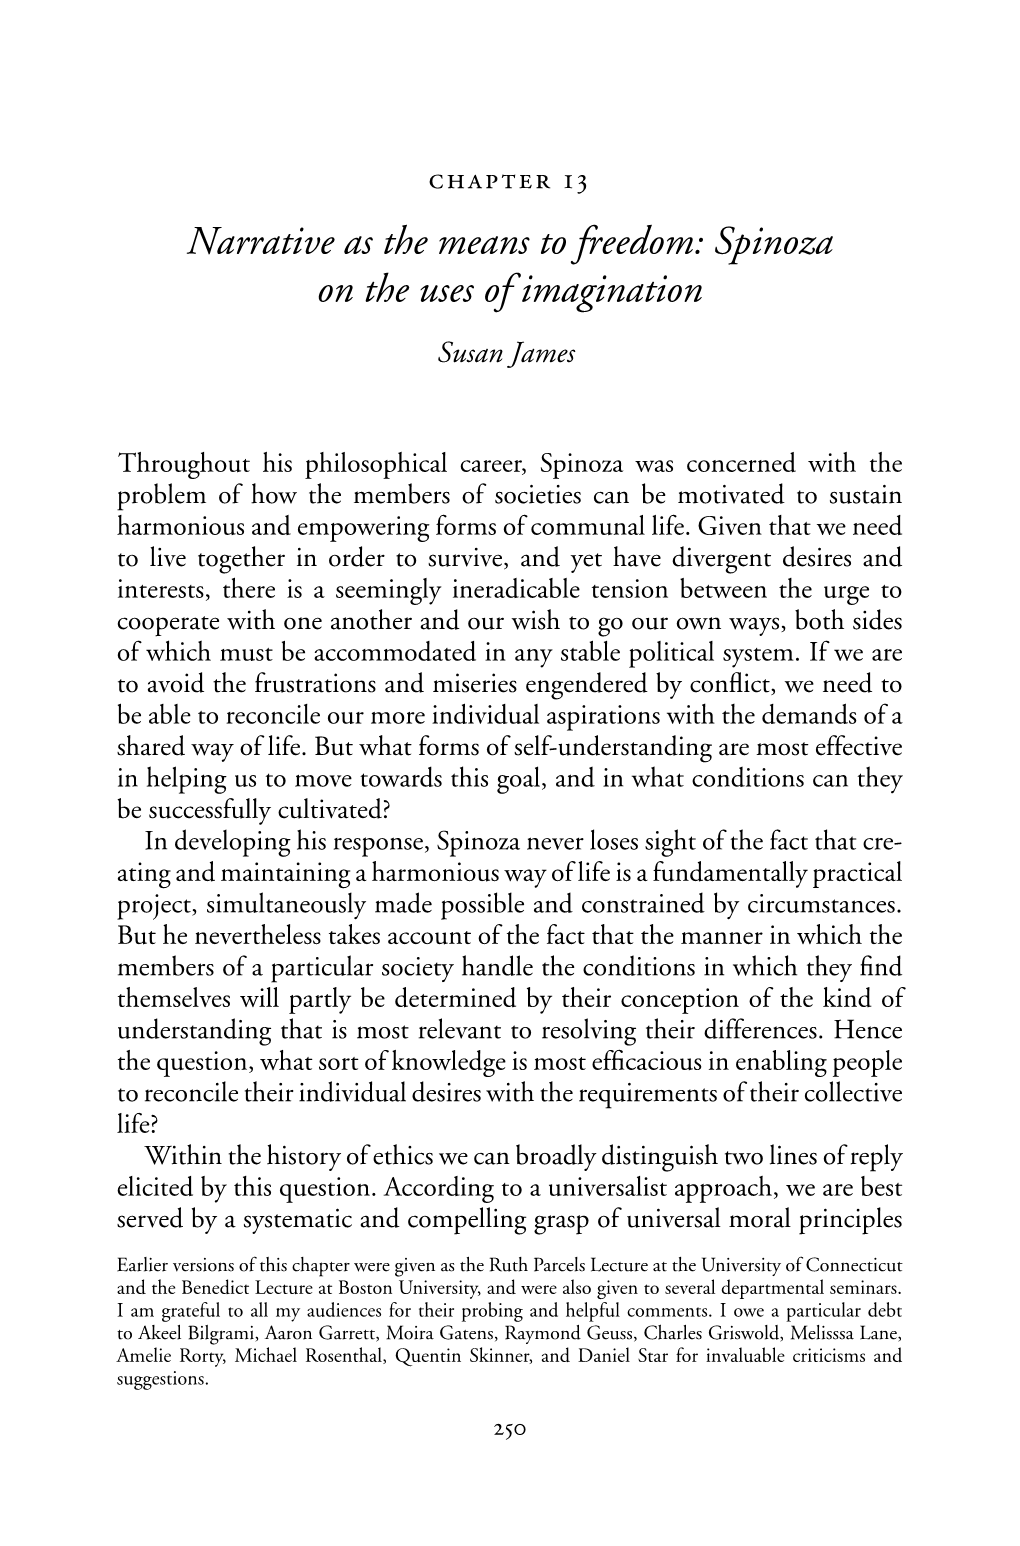 Spinoza on the Uses of Imagination Susan James